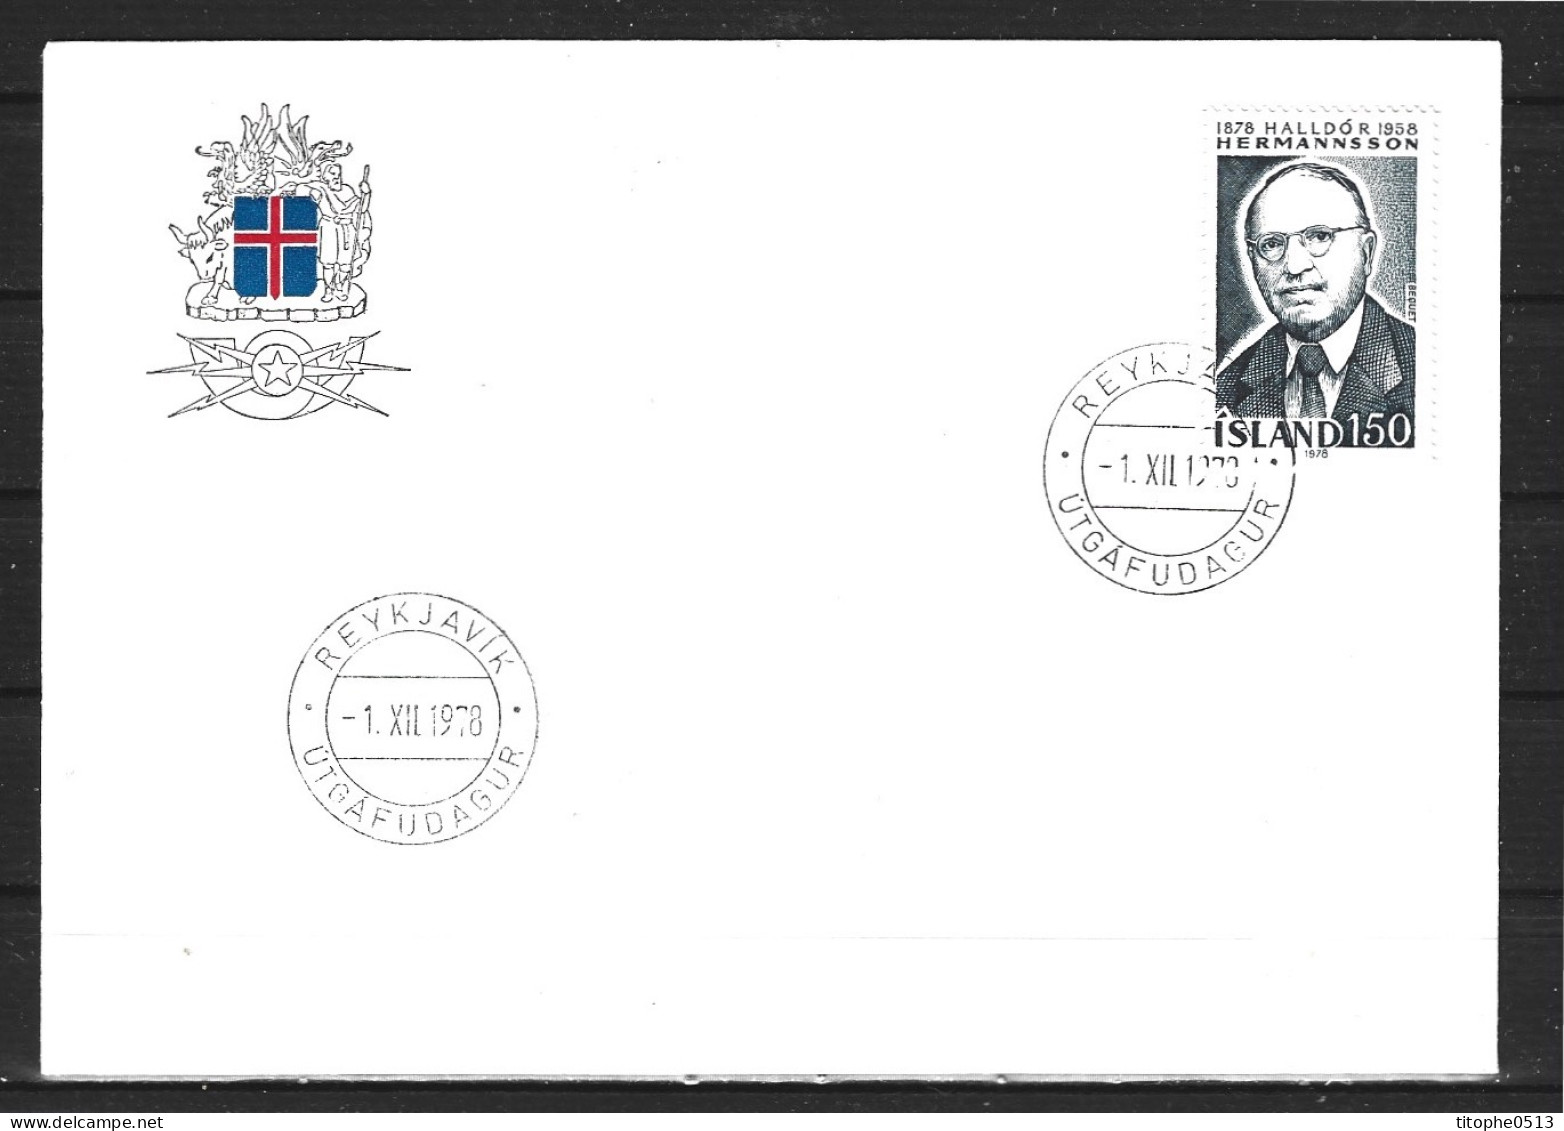 ISLANDE. N°491 De 1978 Sur Enveloppe 1er Jour (FDC). H. Hermannsson. - FDC